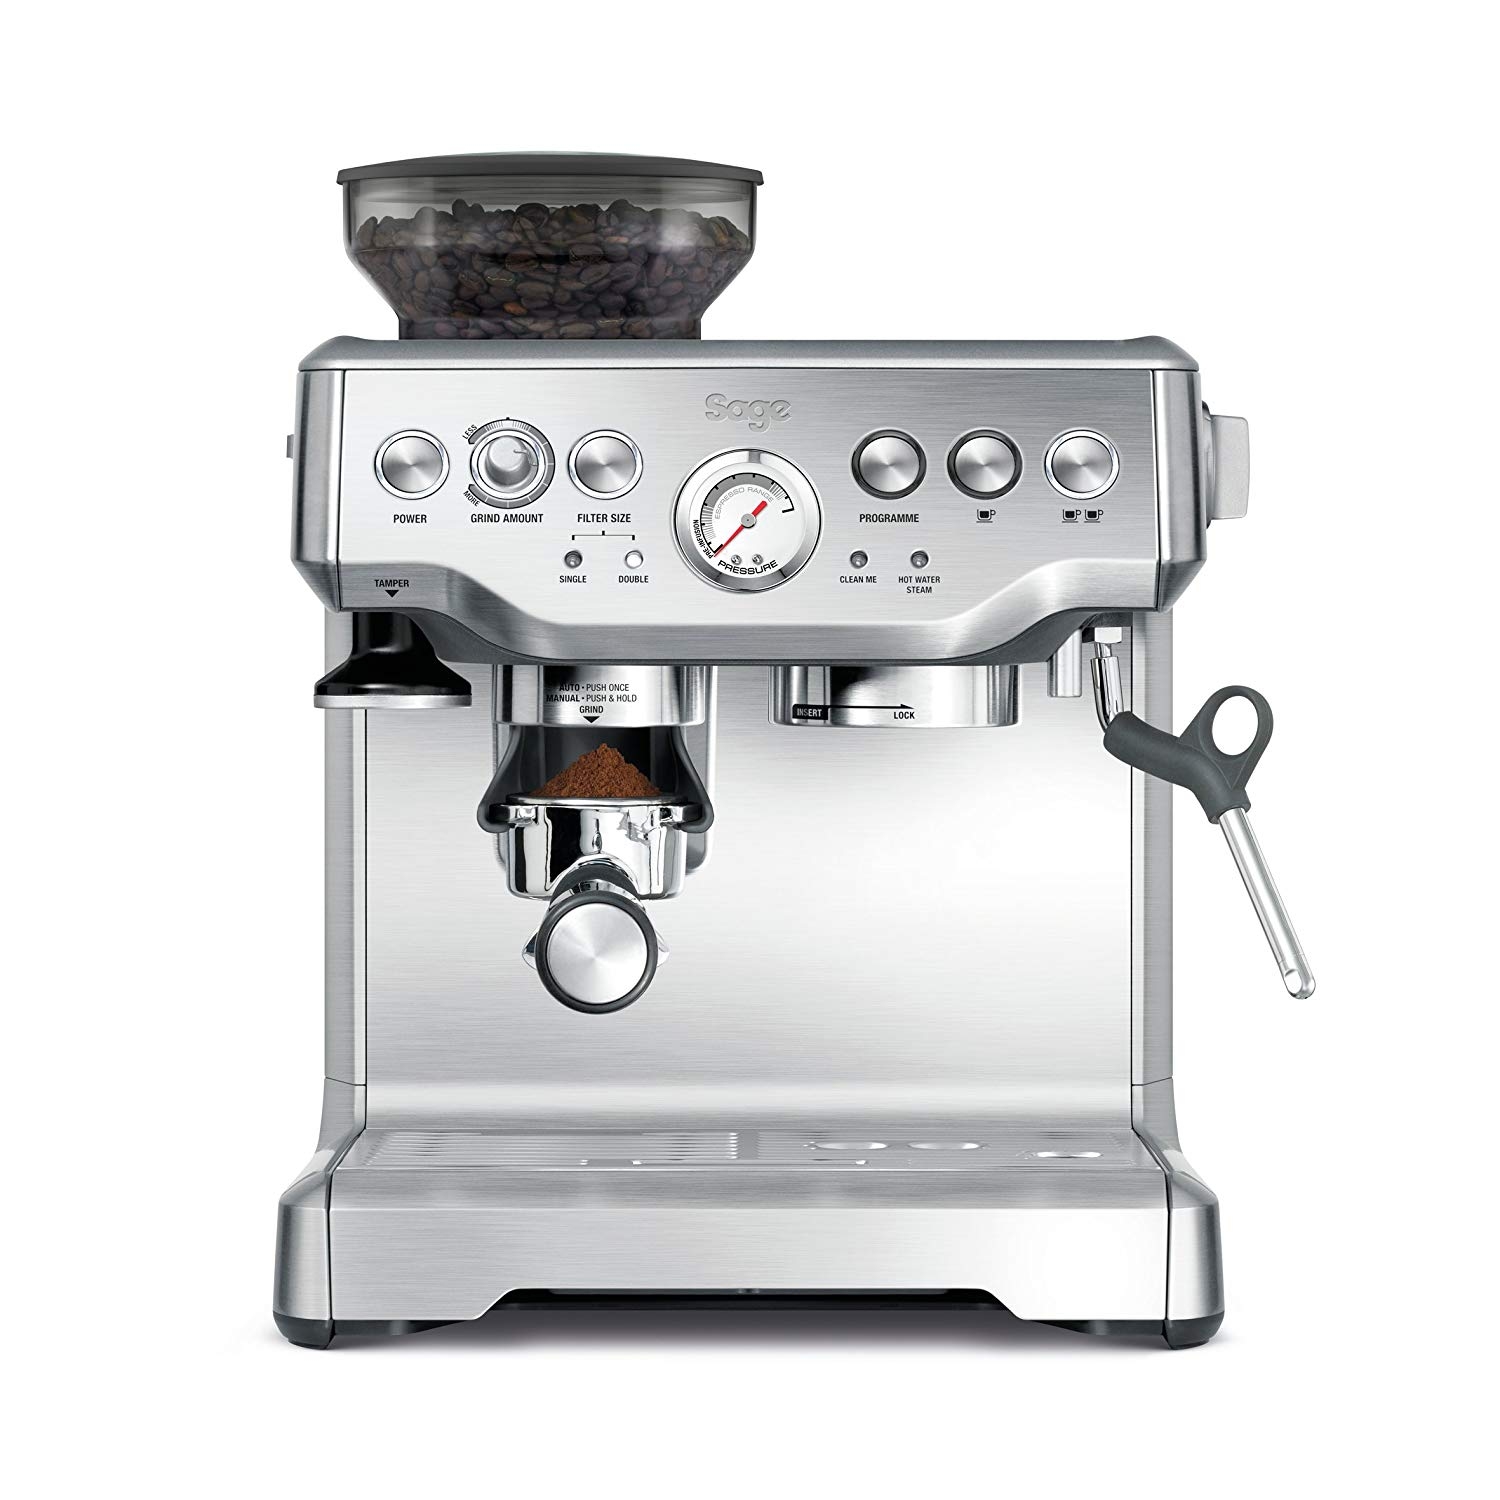 SAGE Barista Express BES875UK Bean to Cup Coffee Machine - Silver - 2